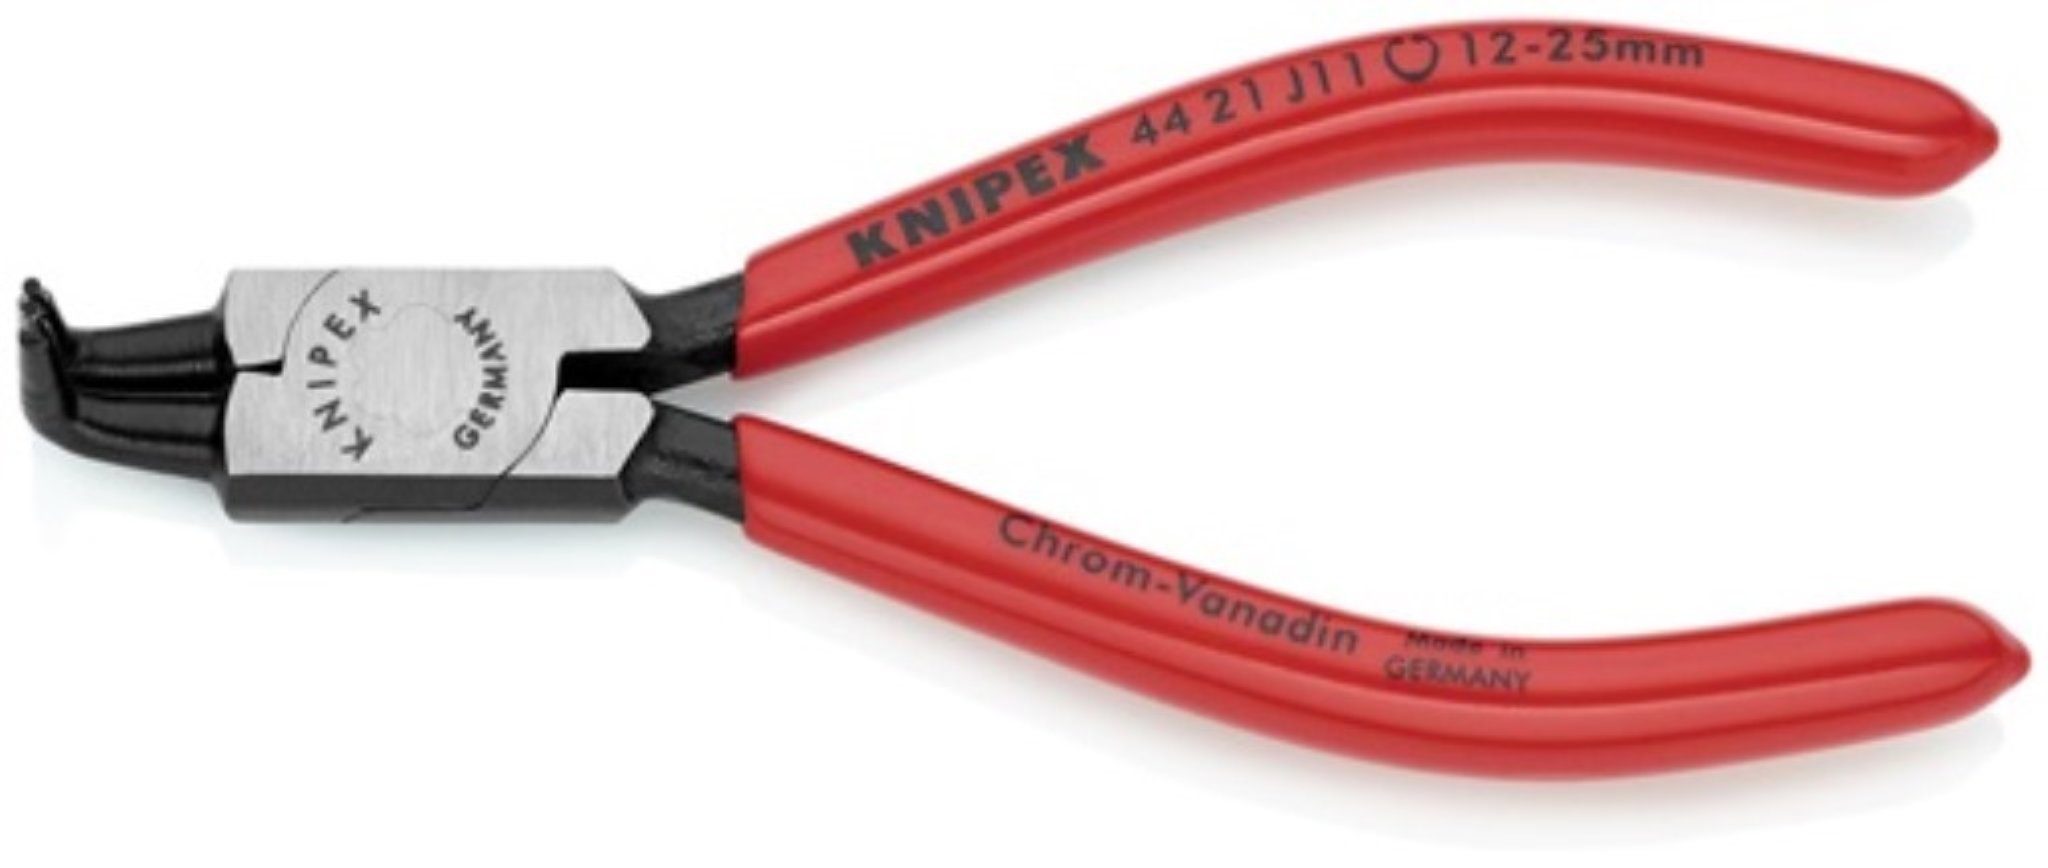 Knipex Sicherungsring Sicherungsringzange J 11 f.Bohrungen D.12-25mm pol.KNIPEX für Innenri | Zangen